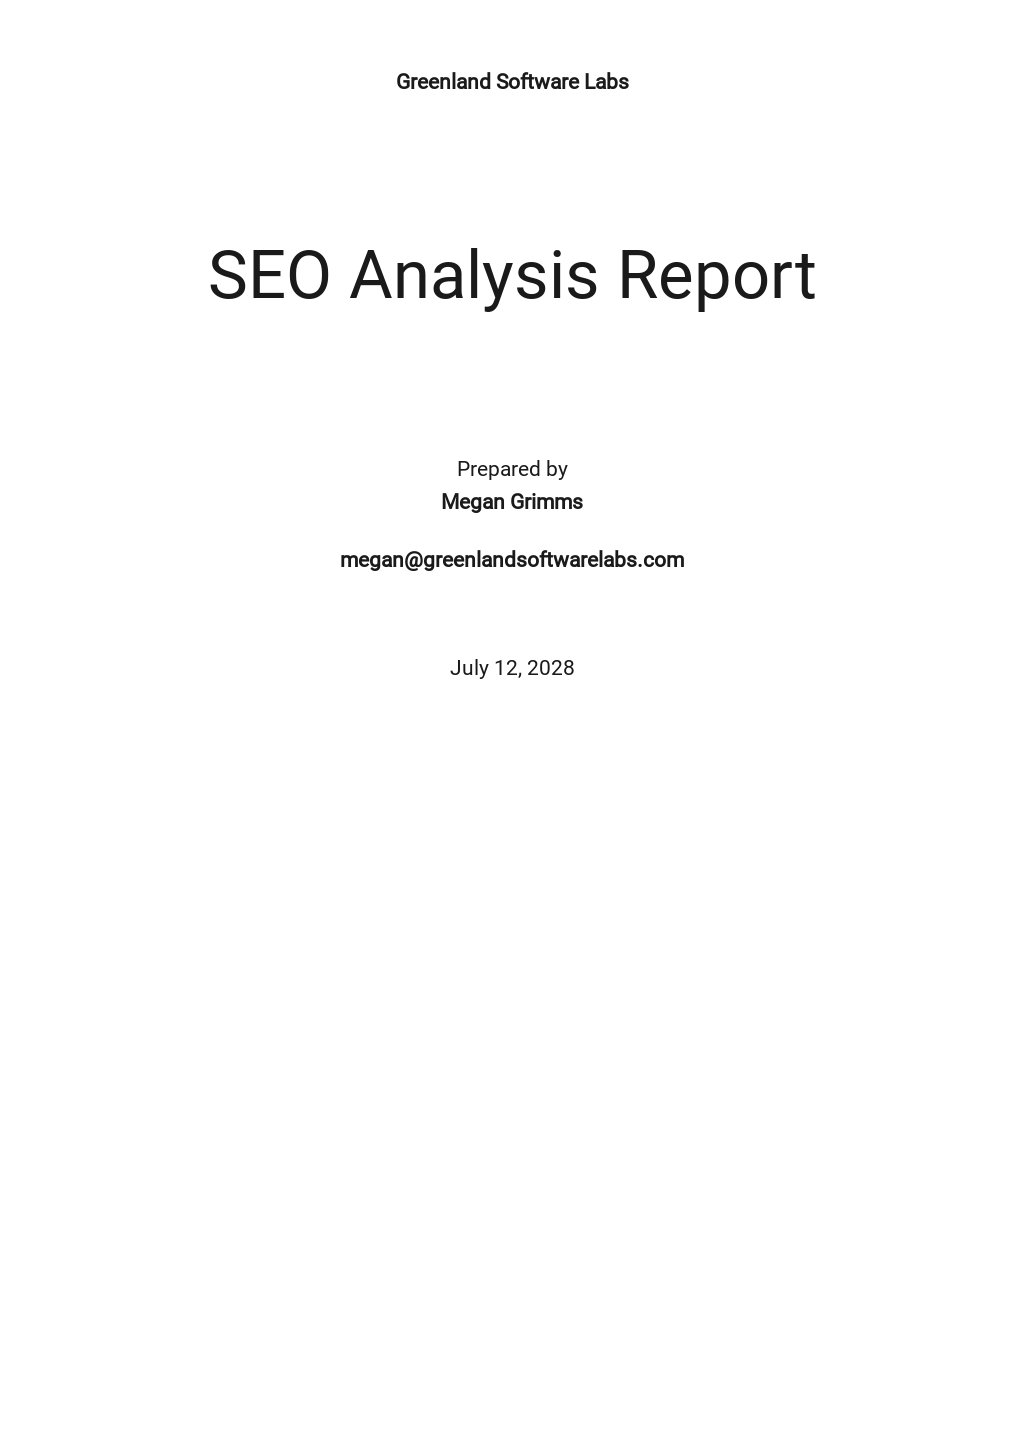 website analysis report free